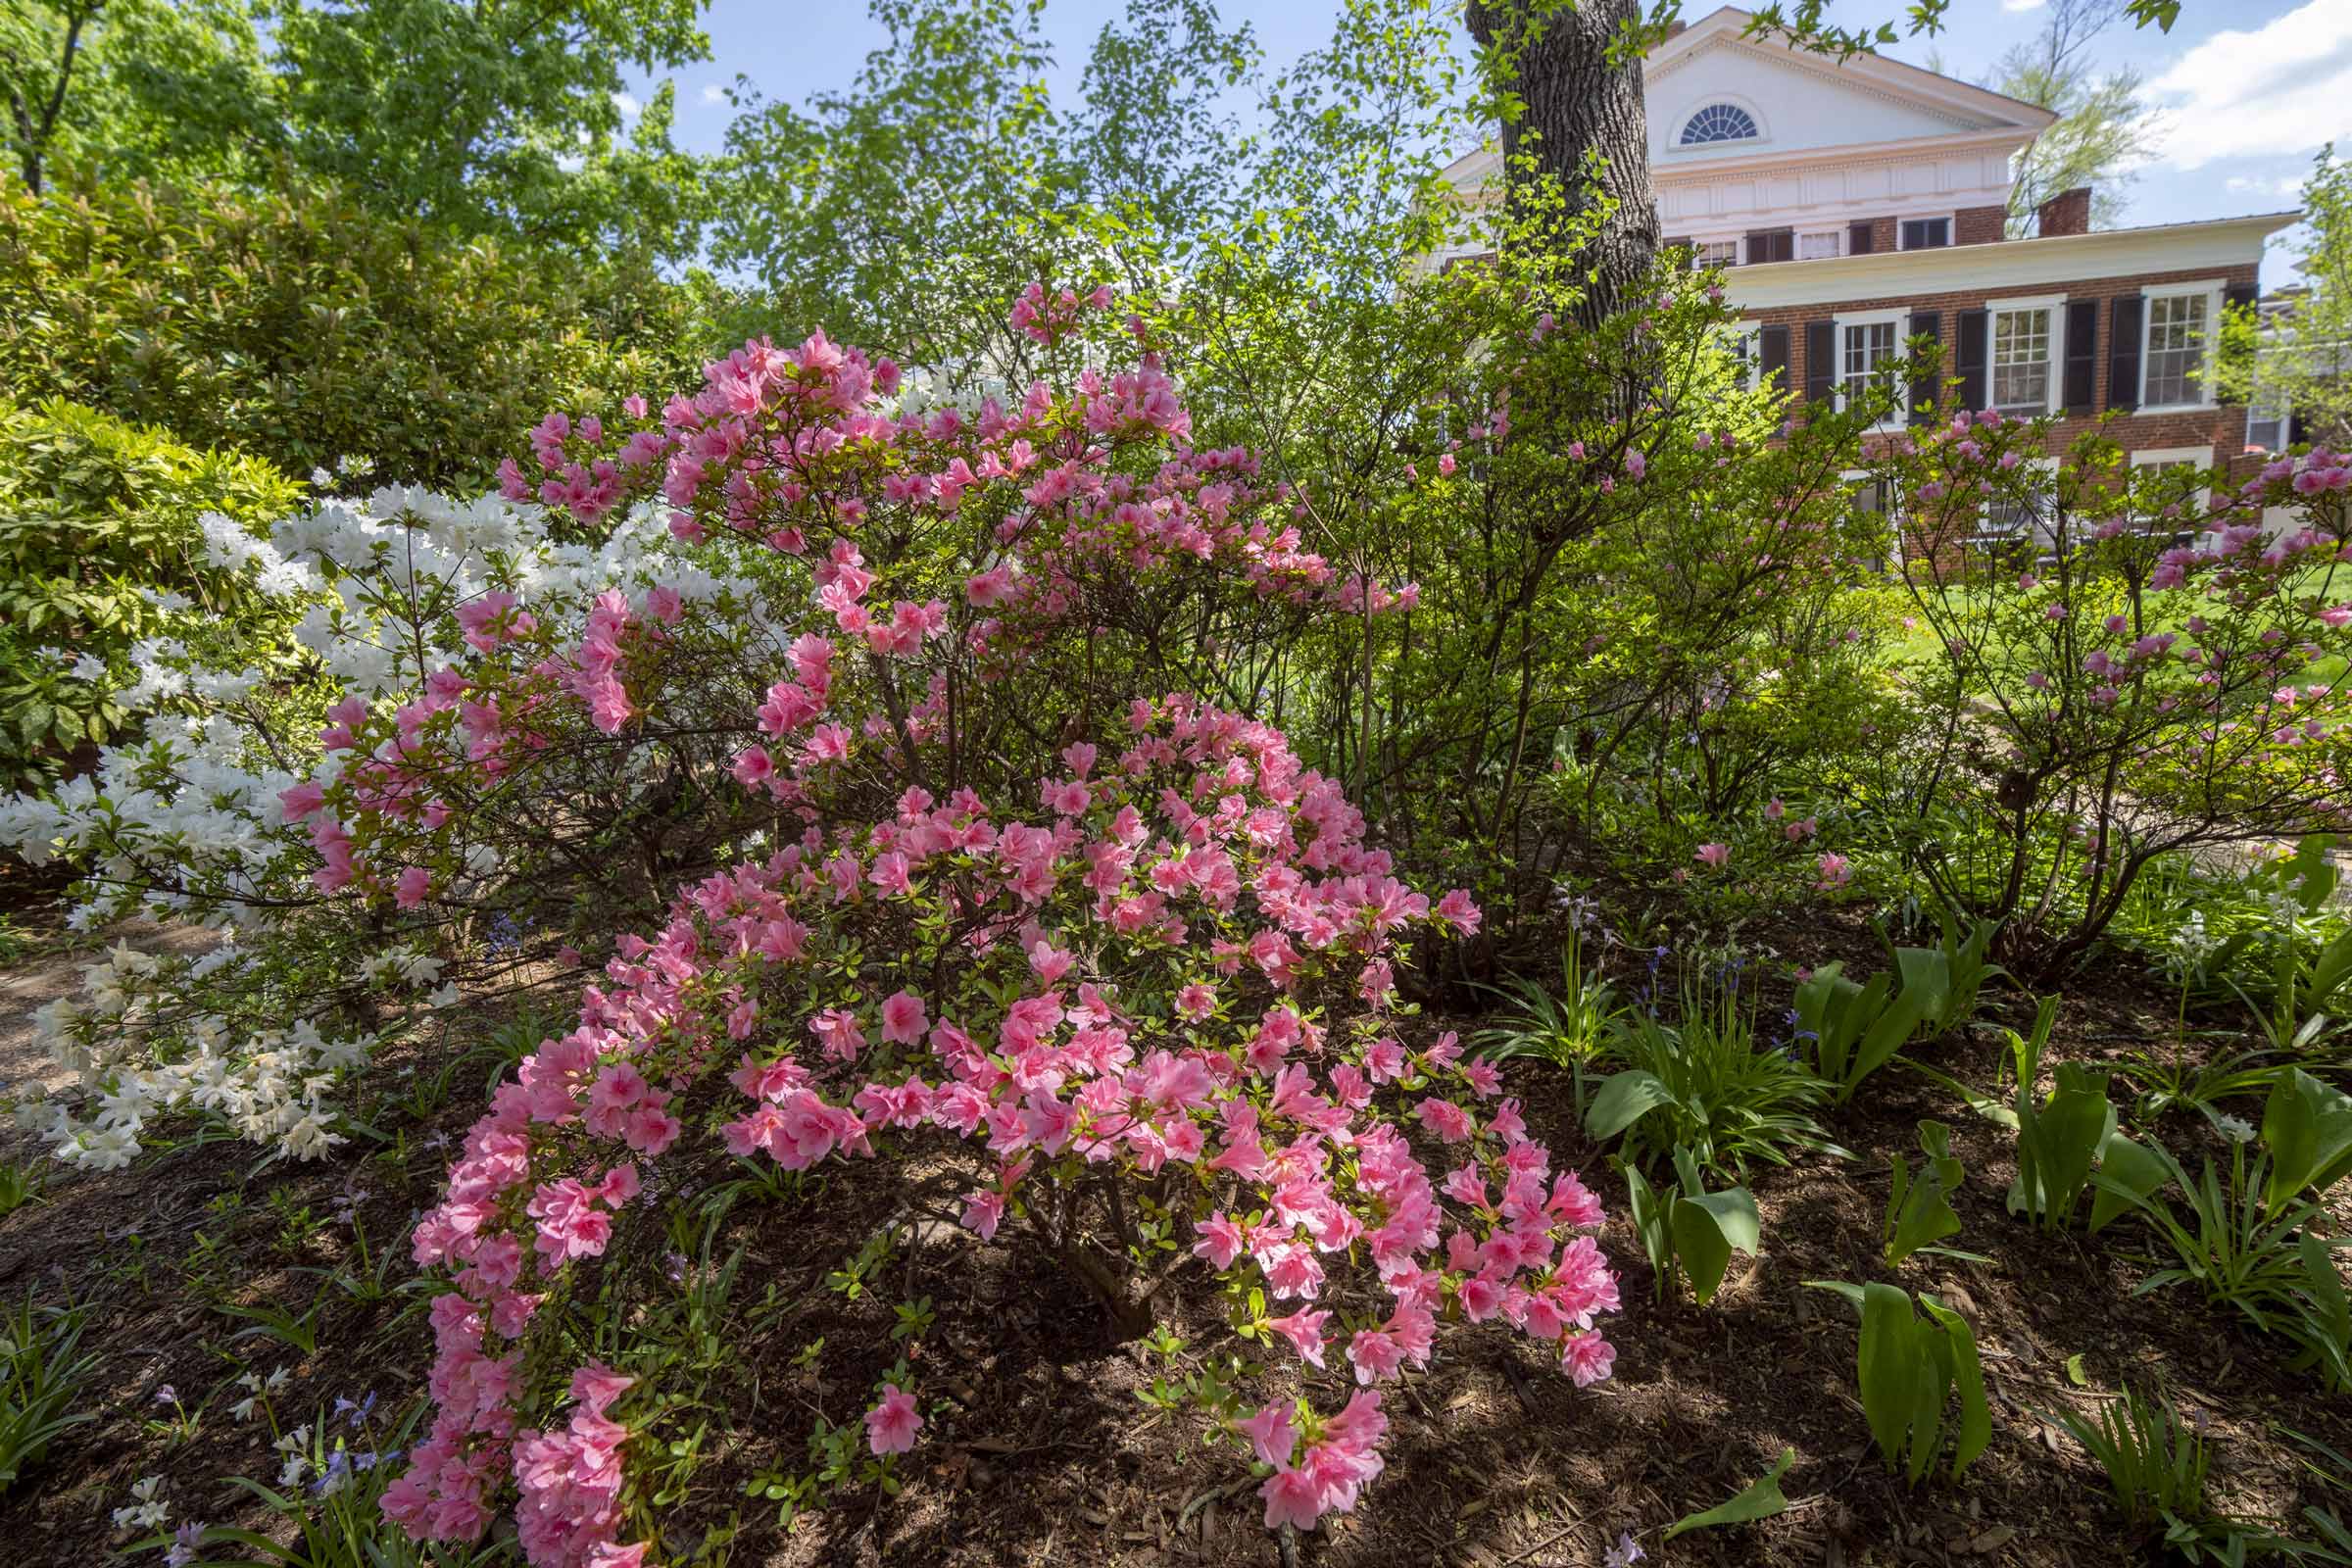 A pink flower bush in bloom in a pavilion garden